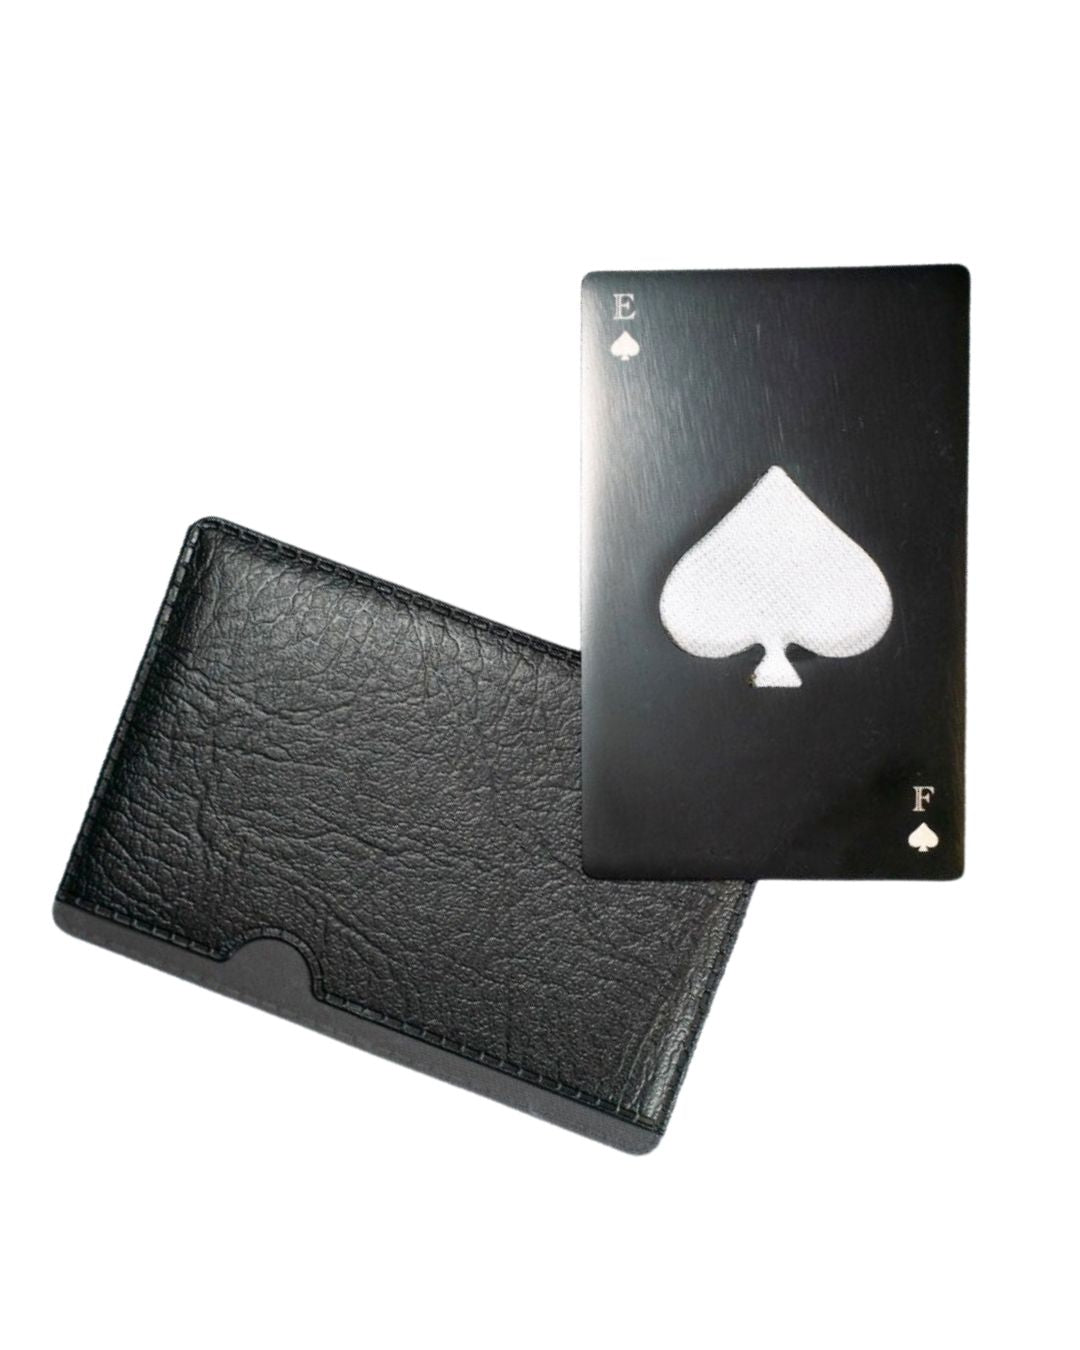 Wallet Black Ace Card Bottle Opener